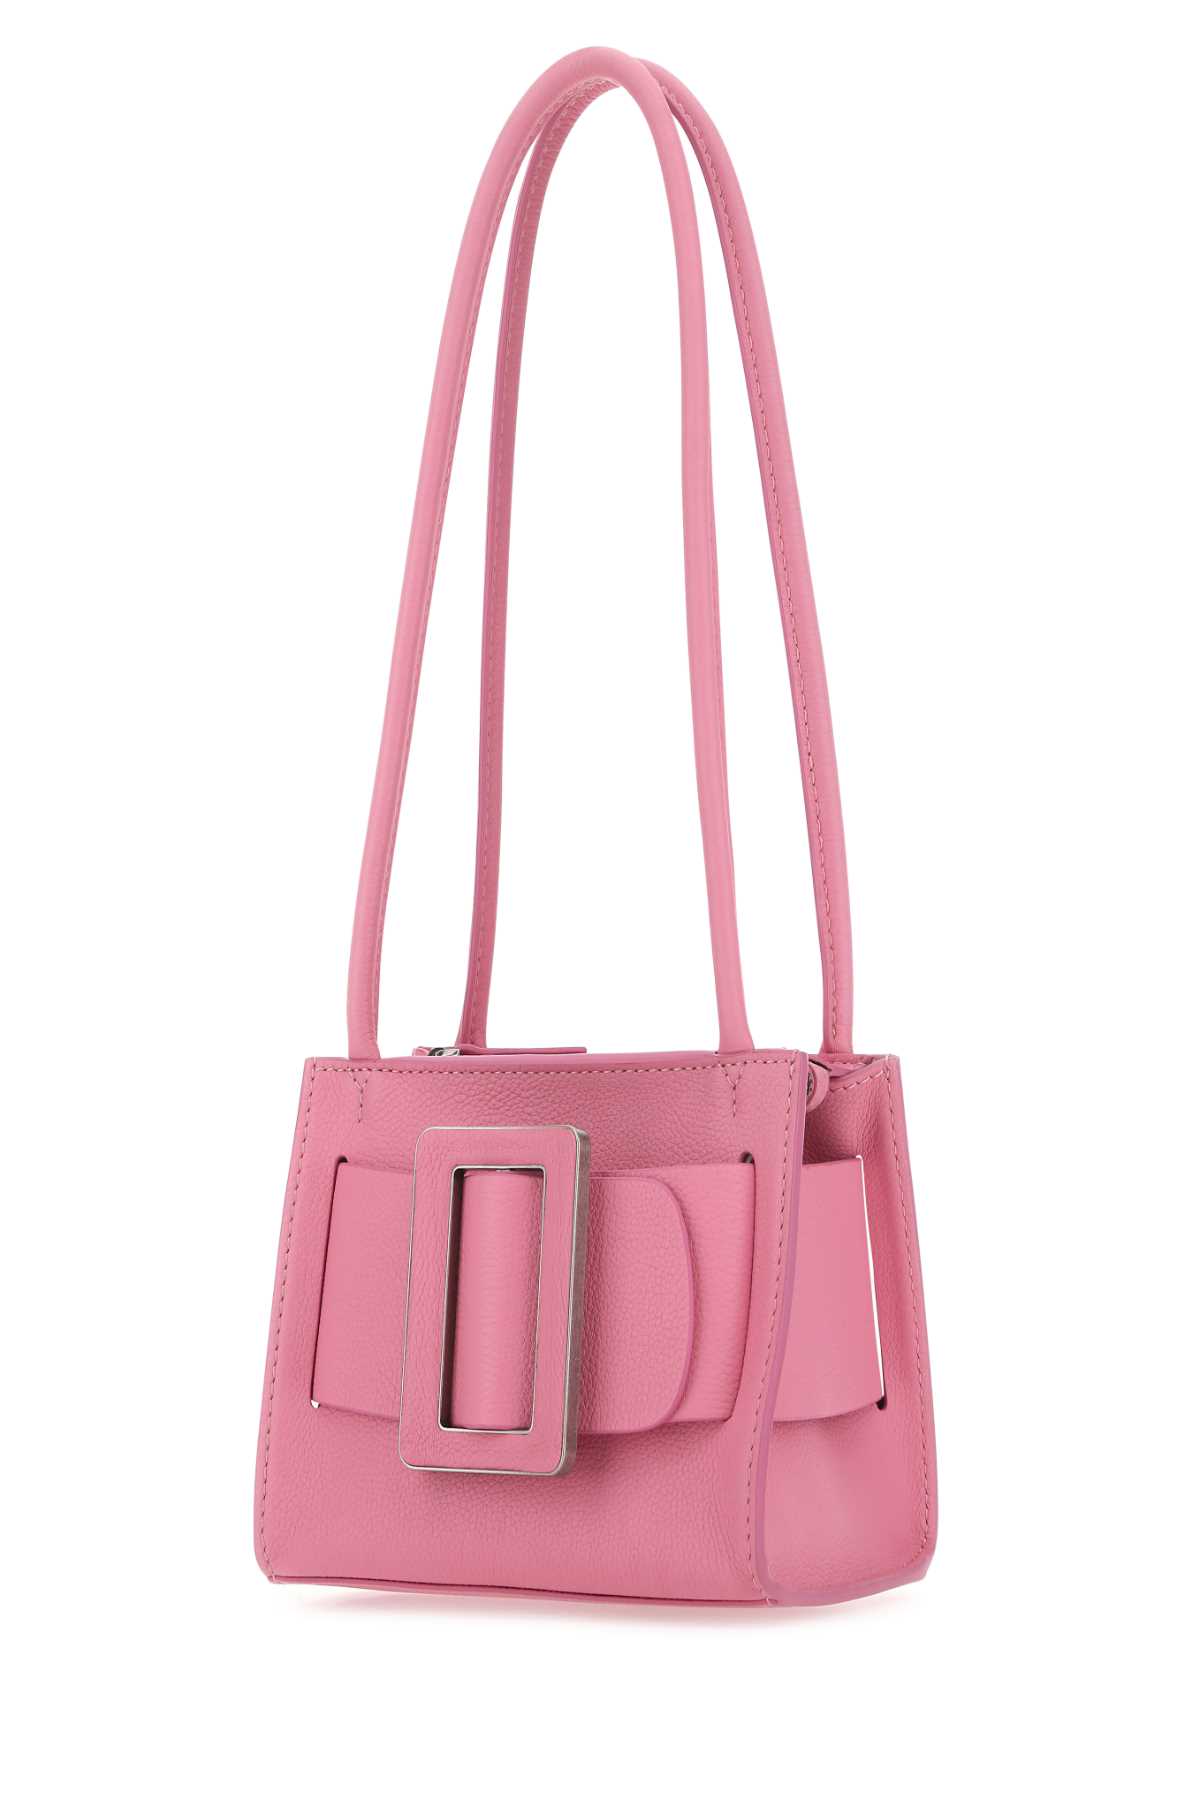 Boyy Pink Leather Bobby 18 Soft Shoulder Bag In Bubgum